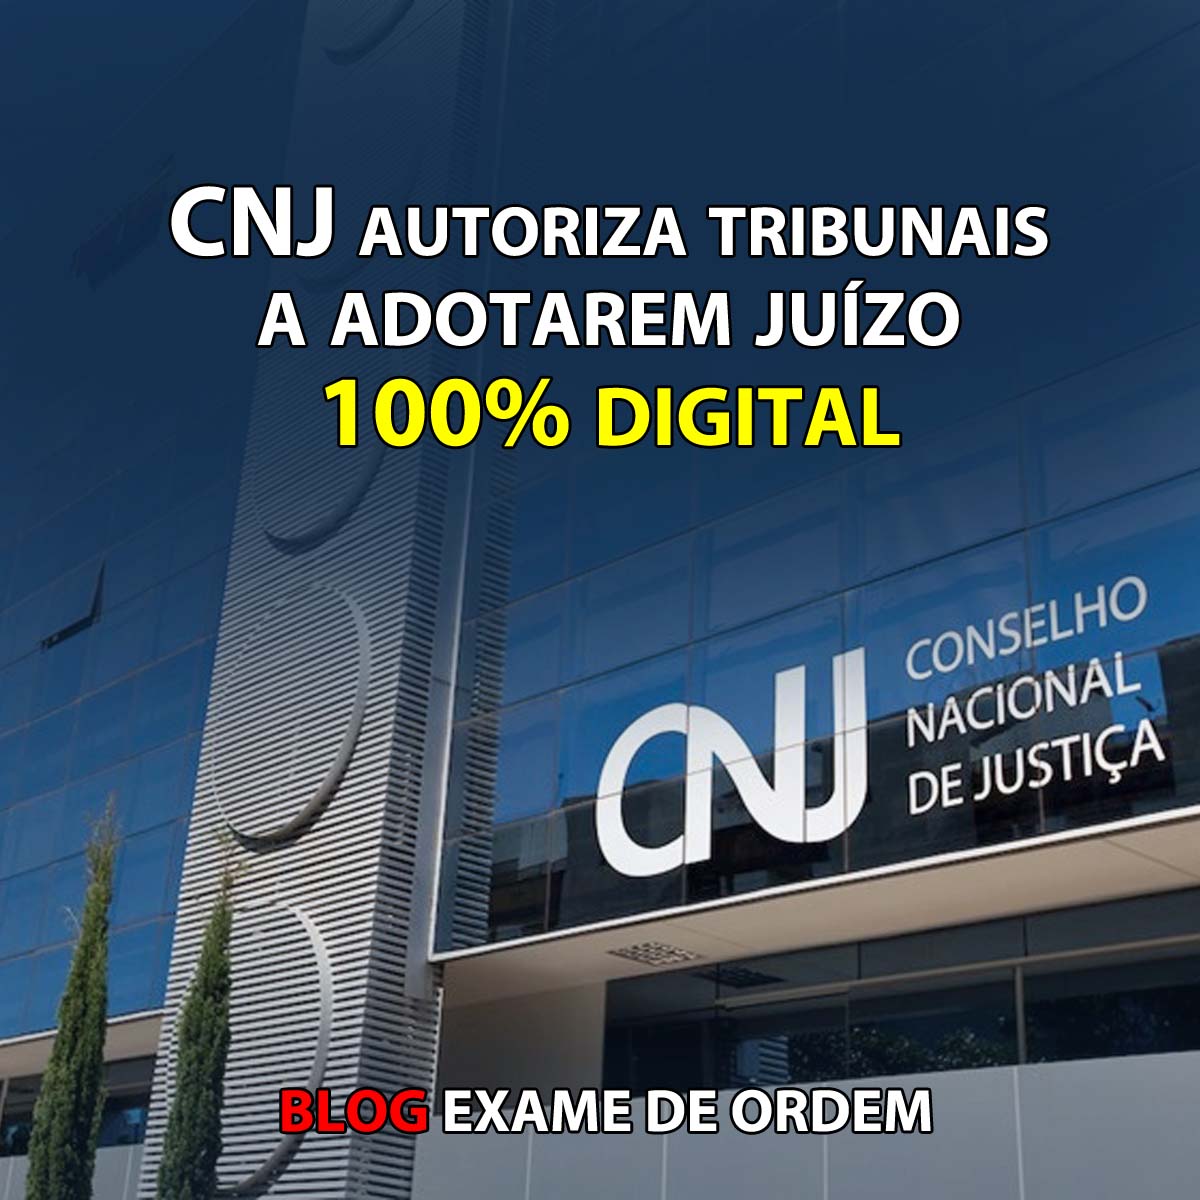 CNJ autoriza tribunais a adotarem juzo 100% digital